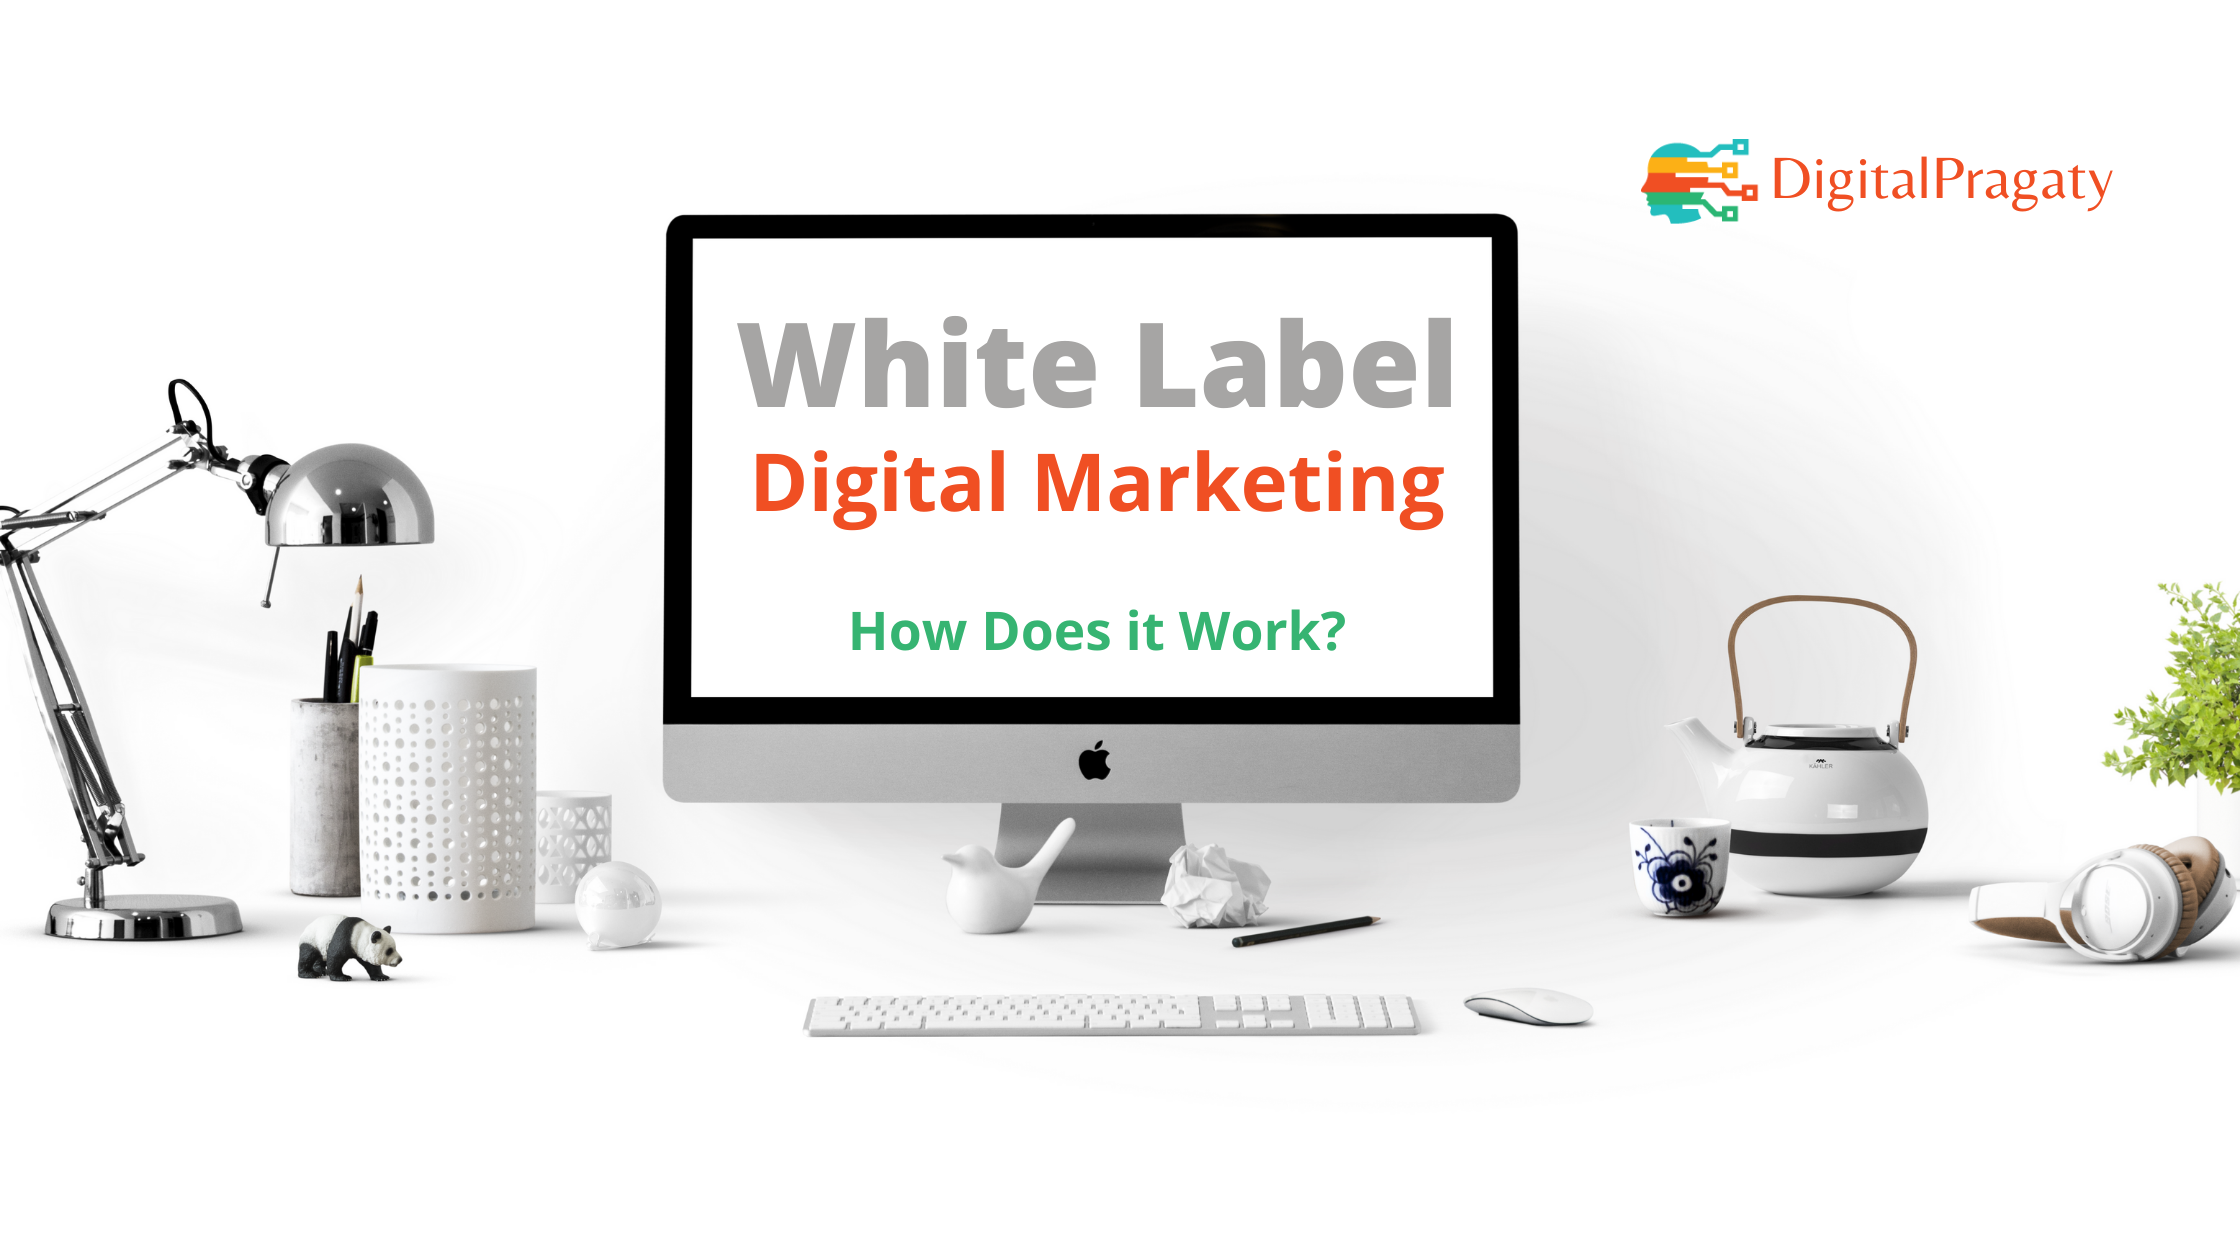 White Label digital marketing